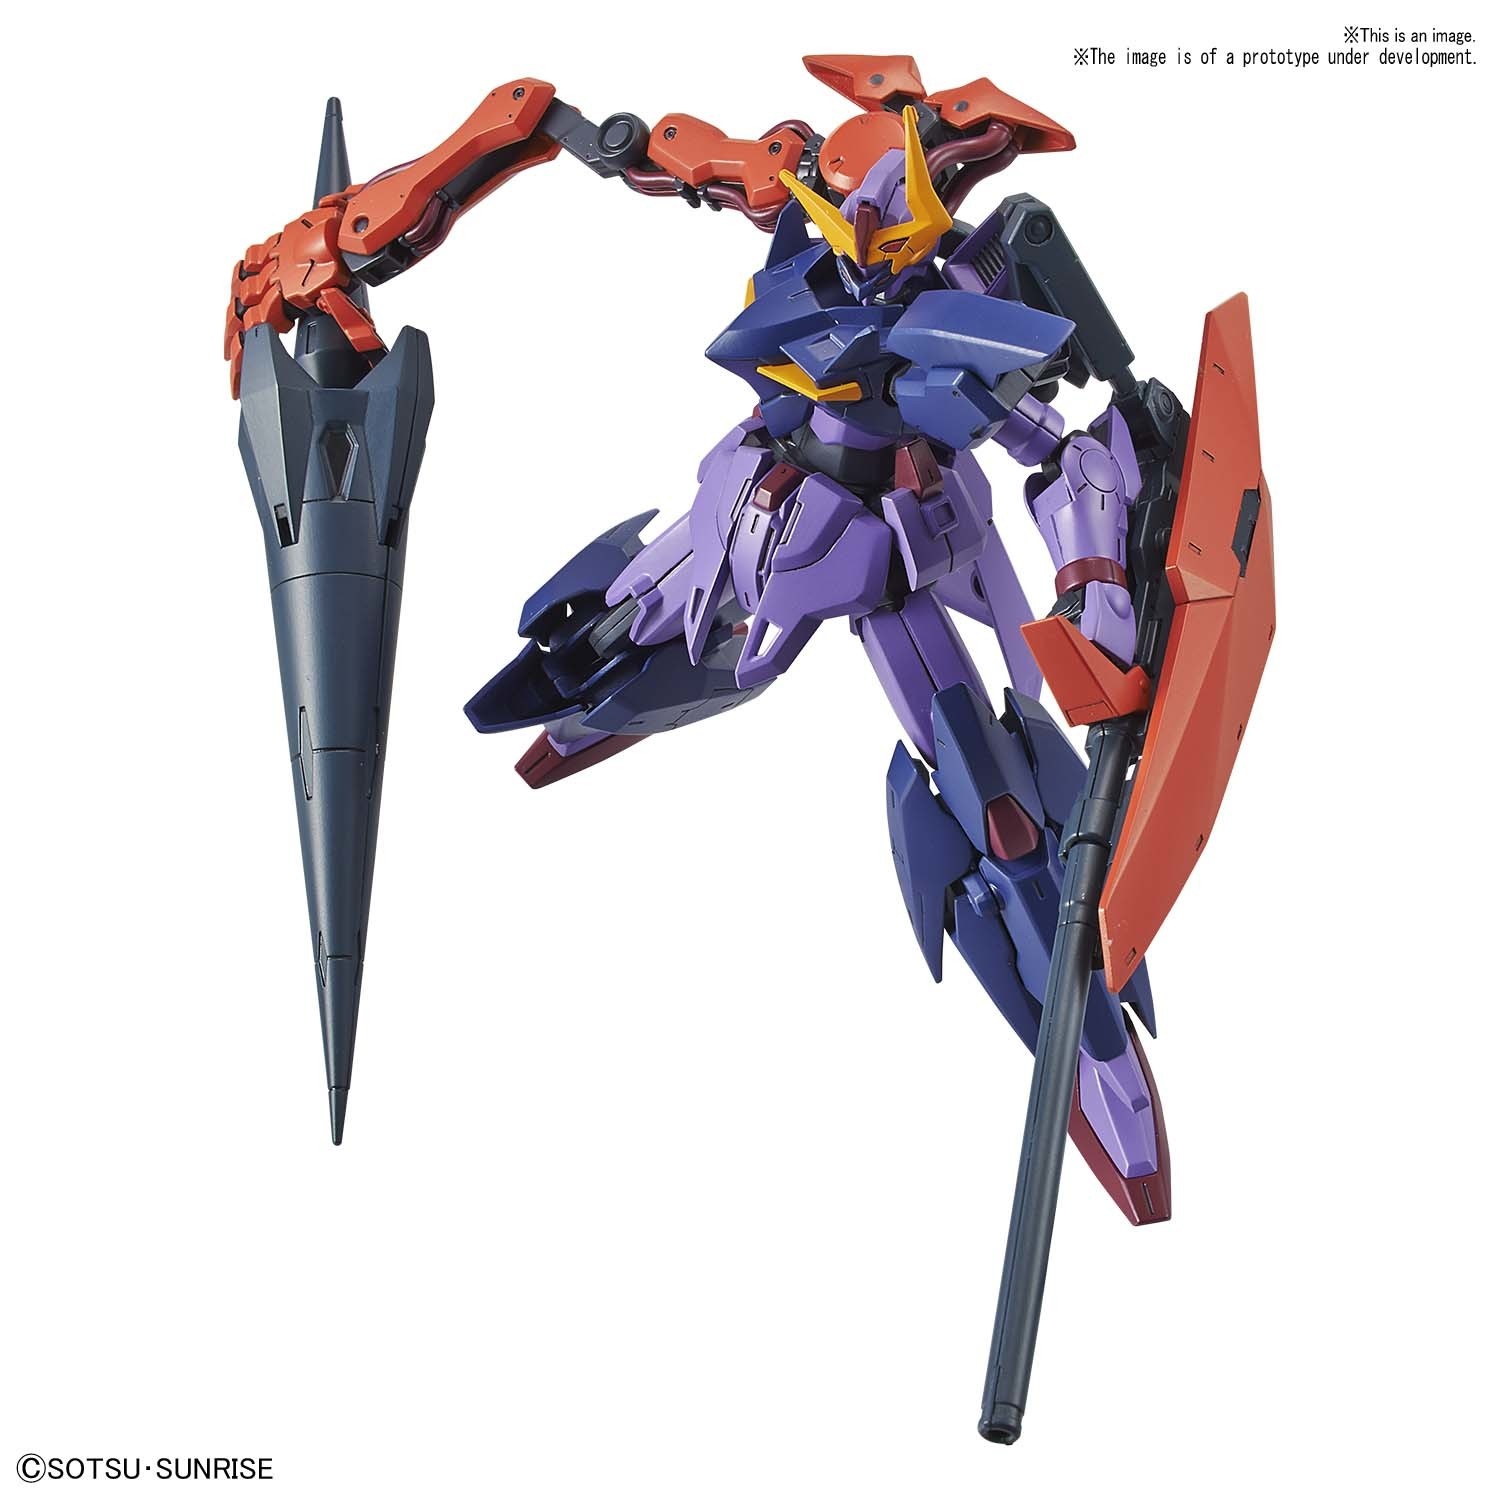 Bandai 5058305 1 144 HG Build Divers R Gundam Seltsam Plastic Model Kit for sale online